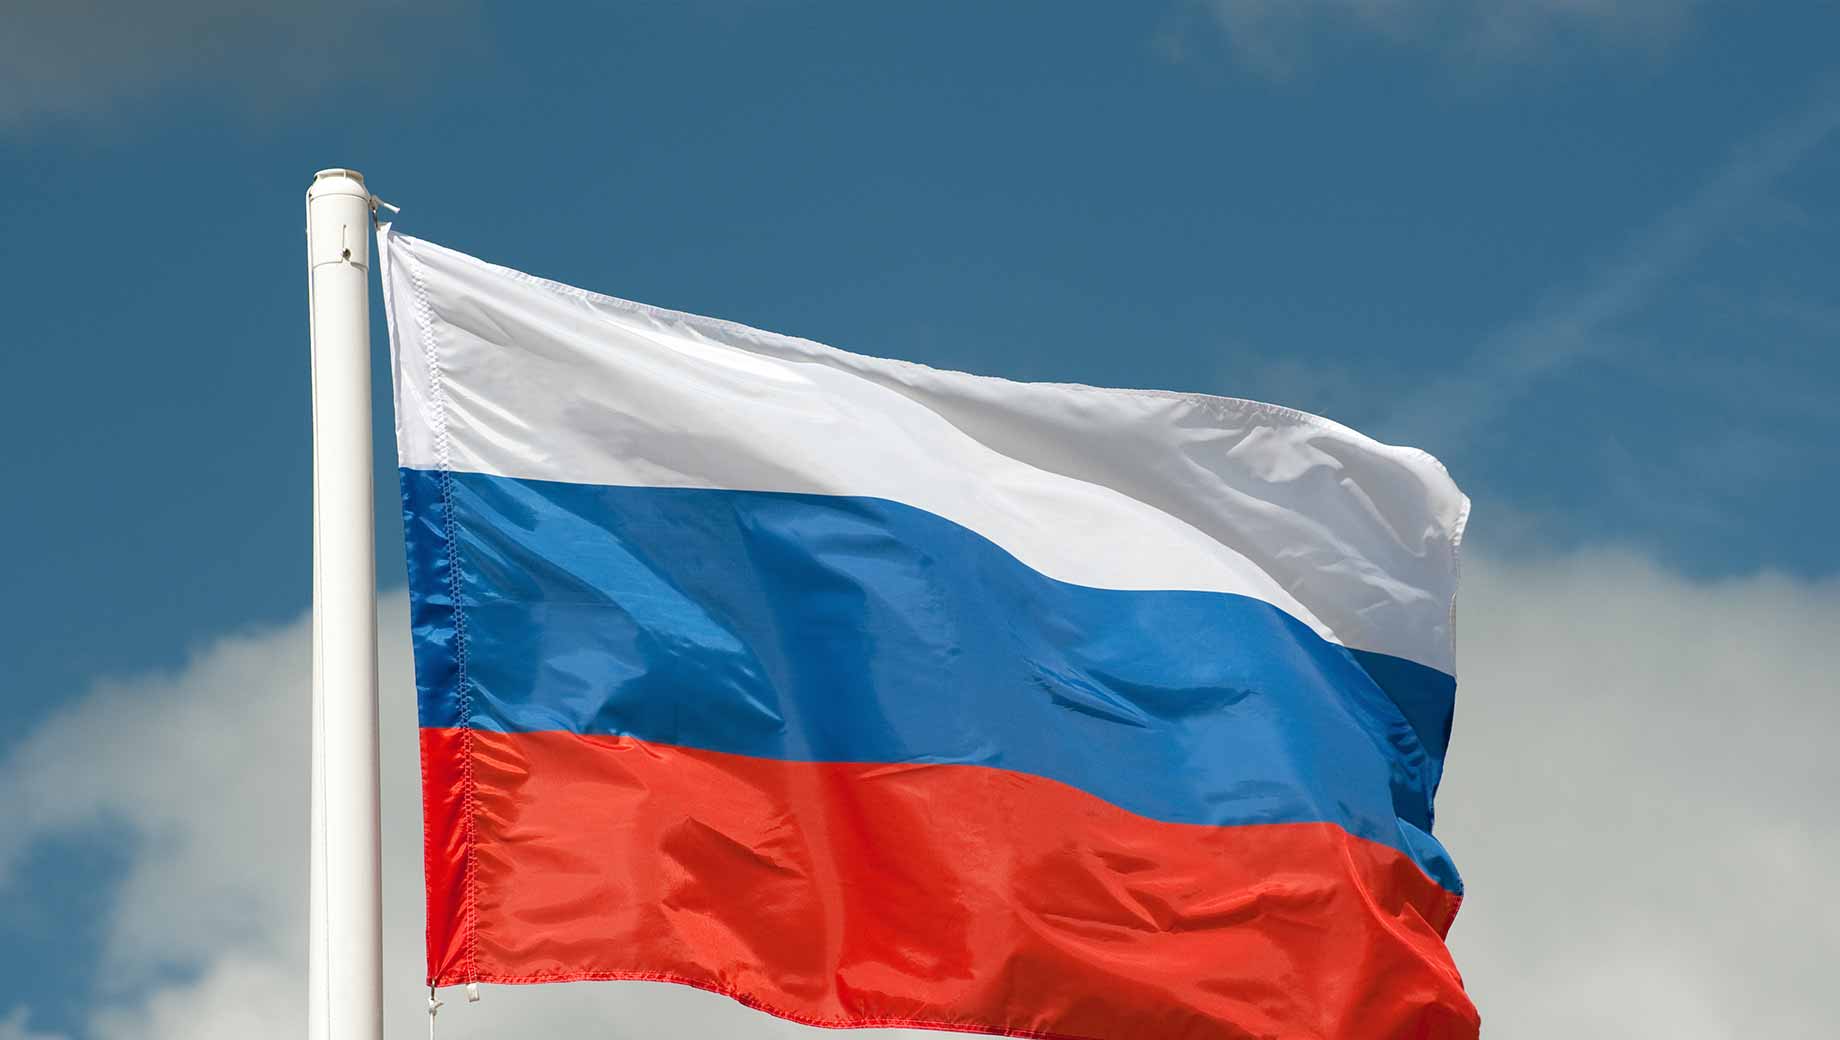 Russia Suffers Global Rebuke After Invasion